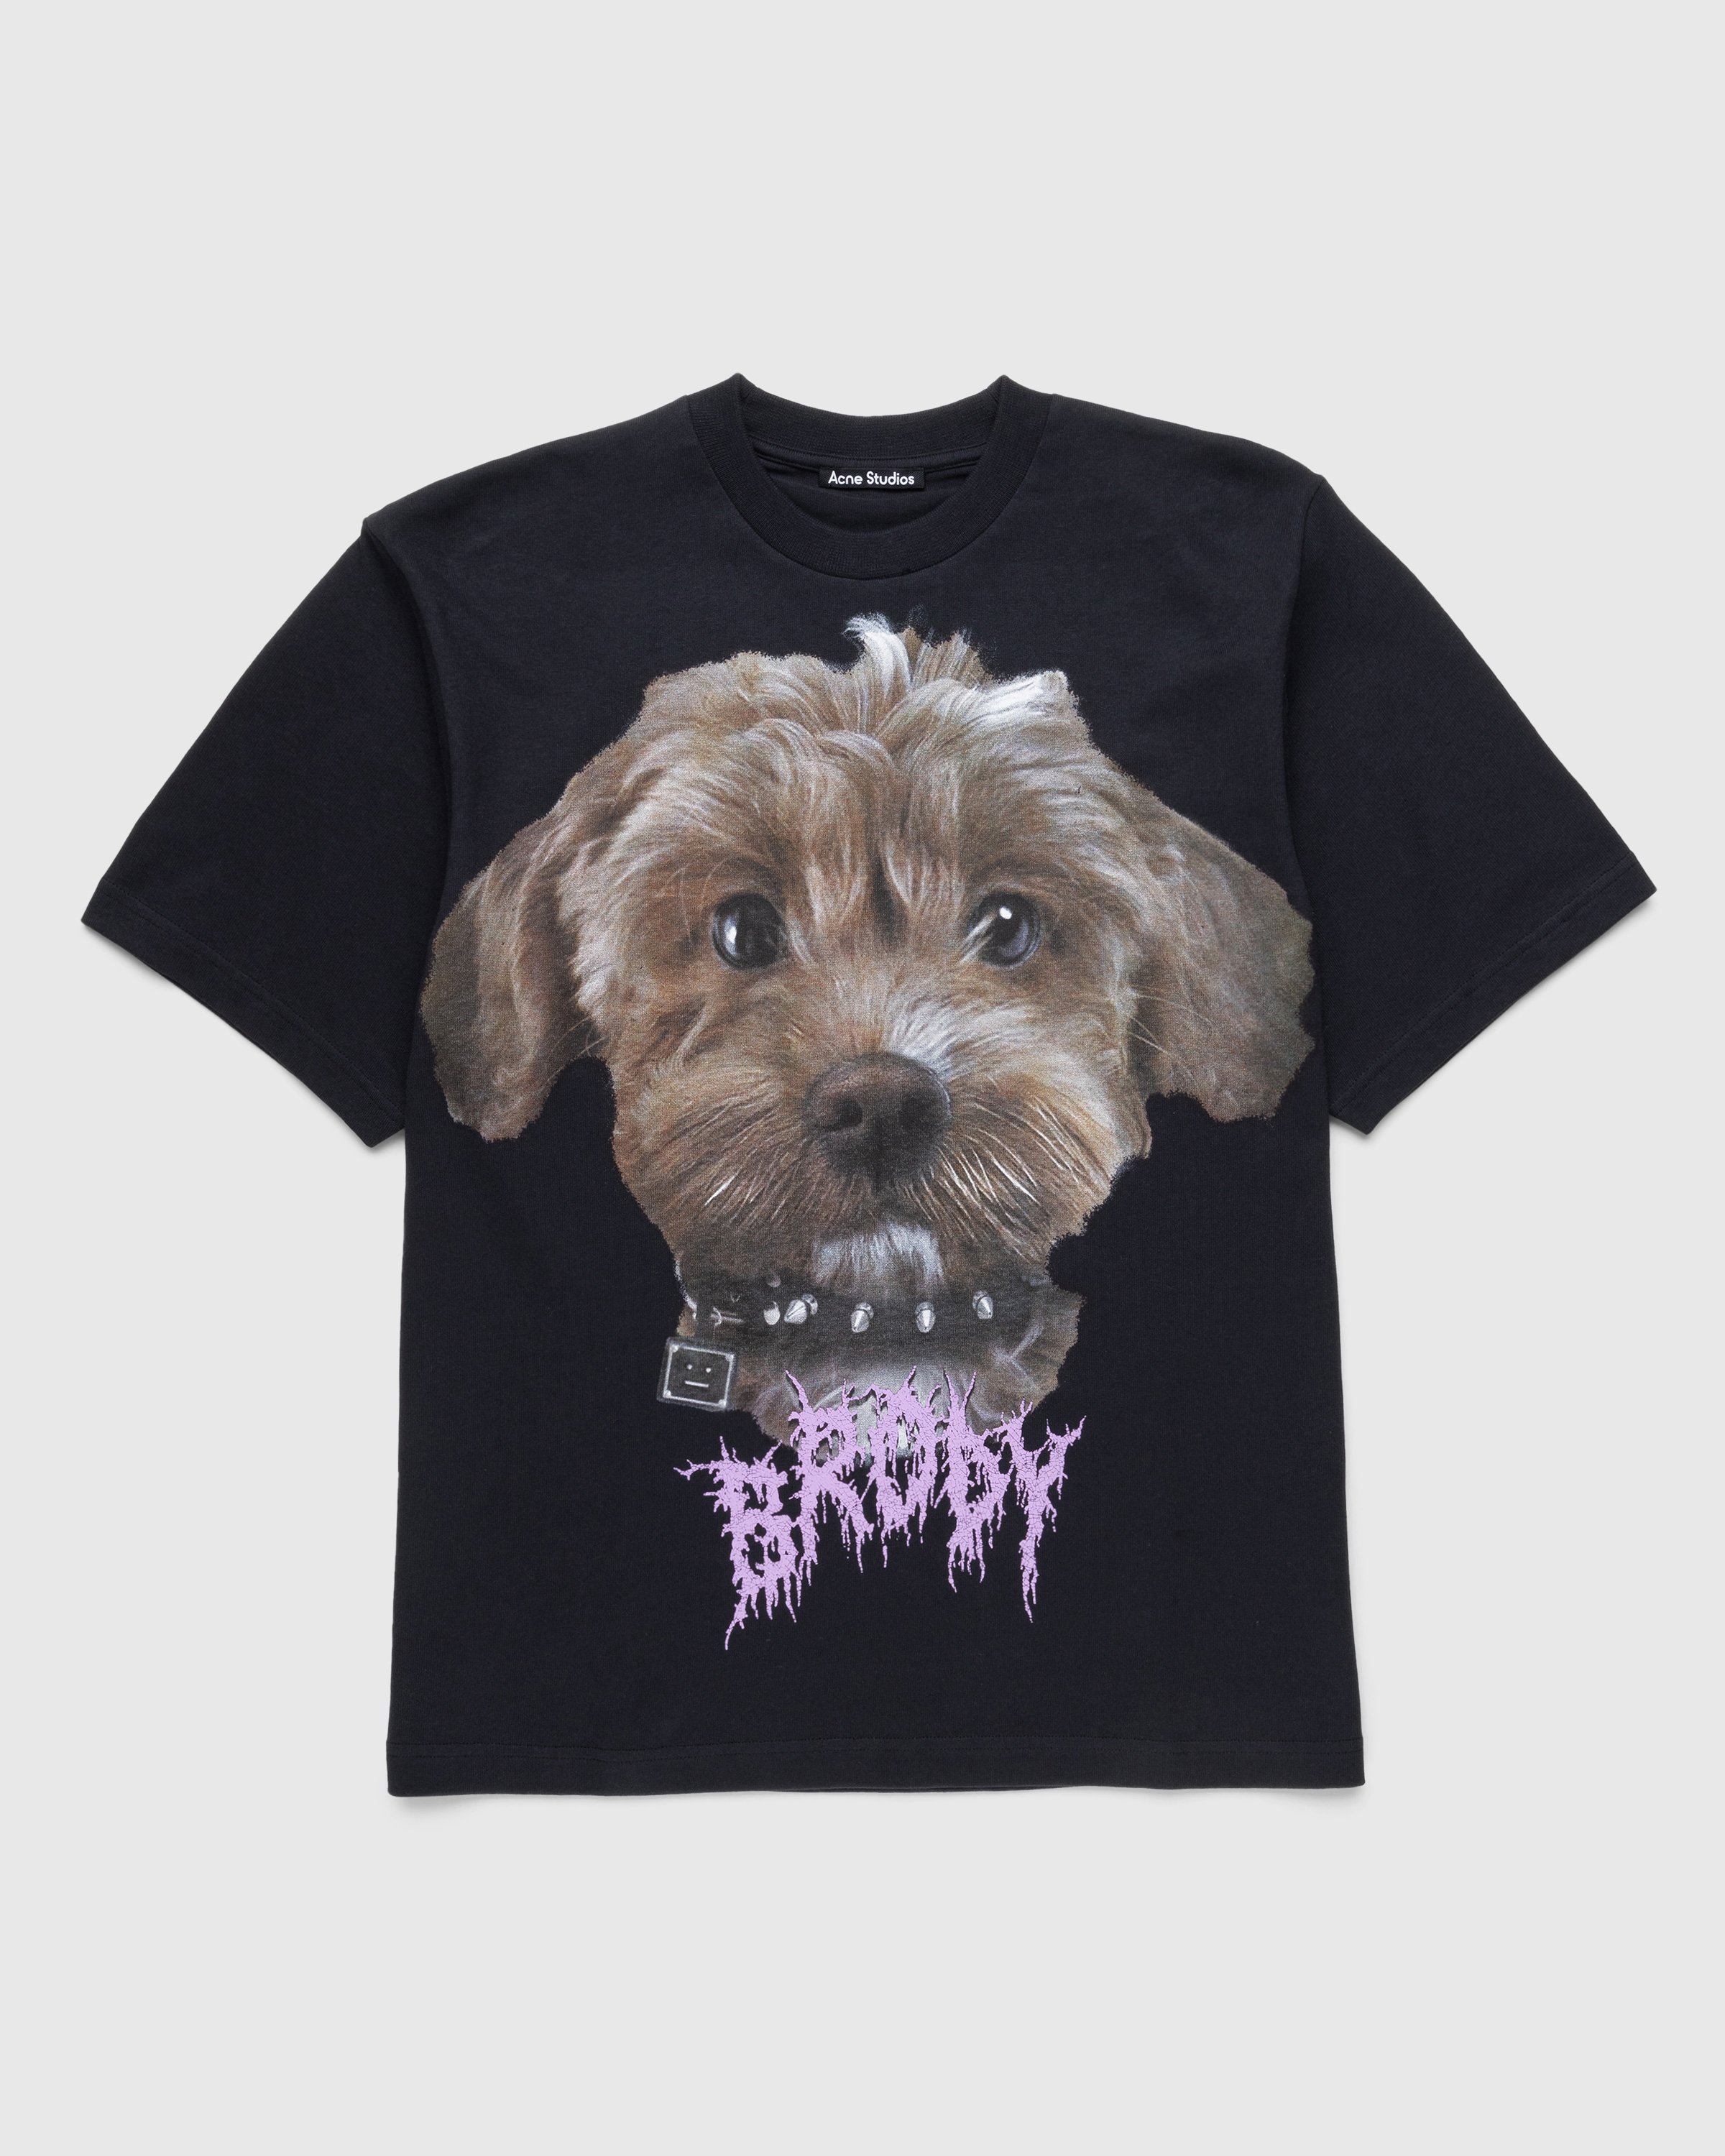 Acne Studios - Printed Dog T-Shirt Faded Black - Clothing - Black - Image 1